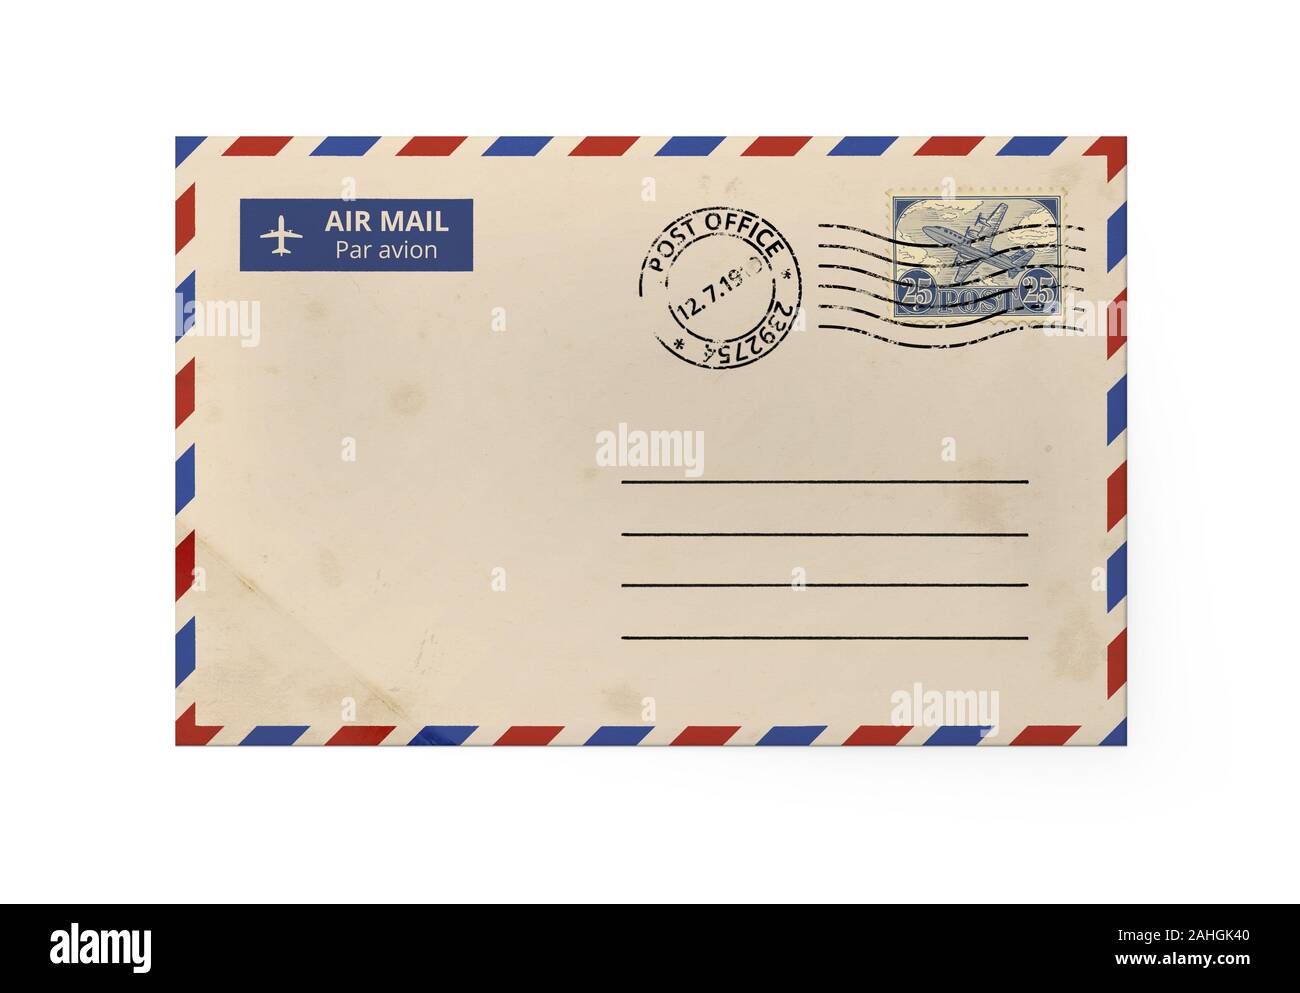 Carta de correo fotografías e imágenes de alta resolución - Alamy